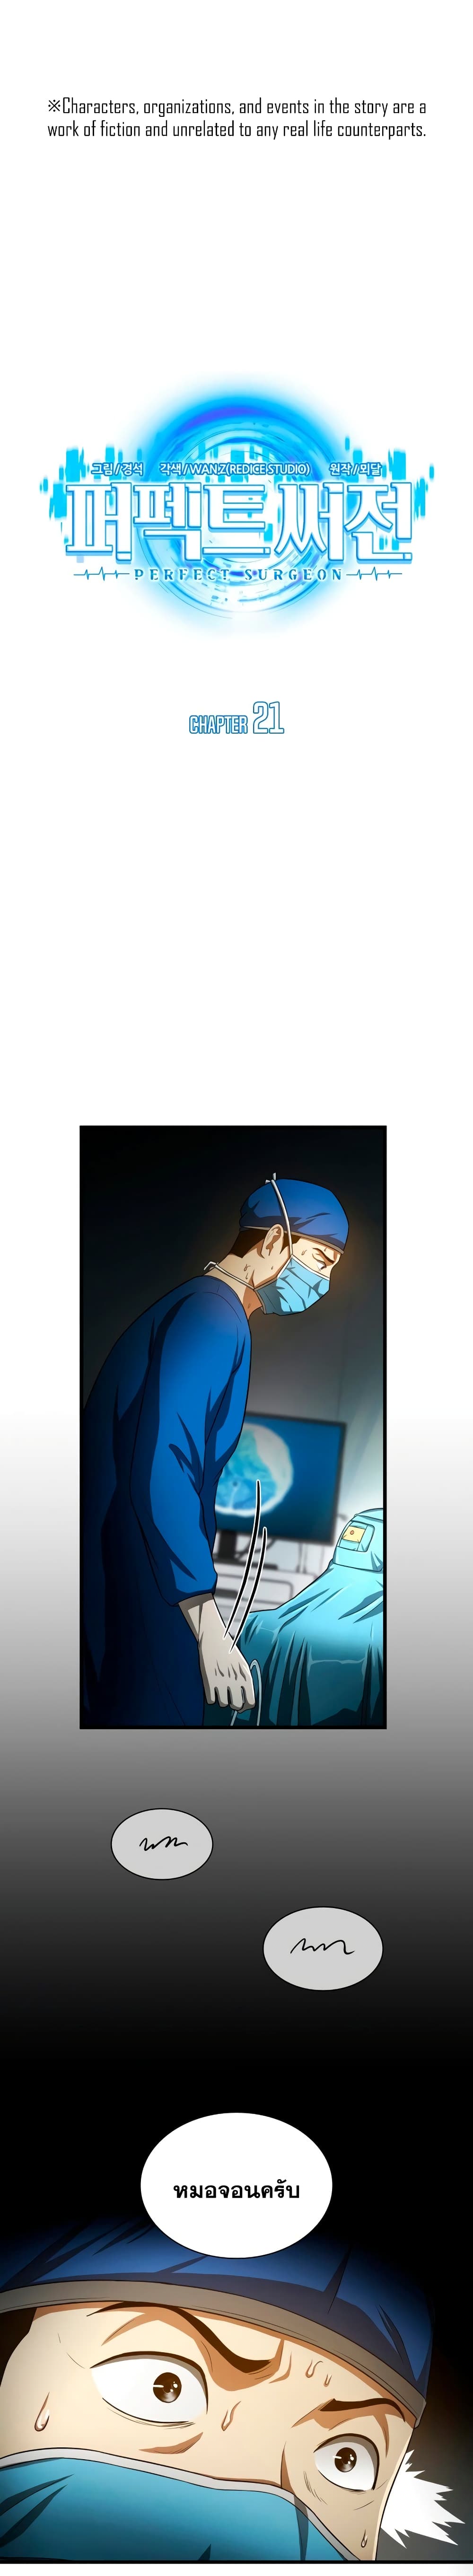 Perfect-Surgeon--21-2.jpg